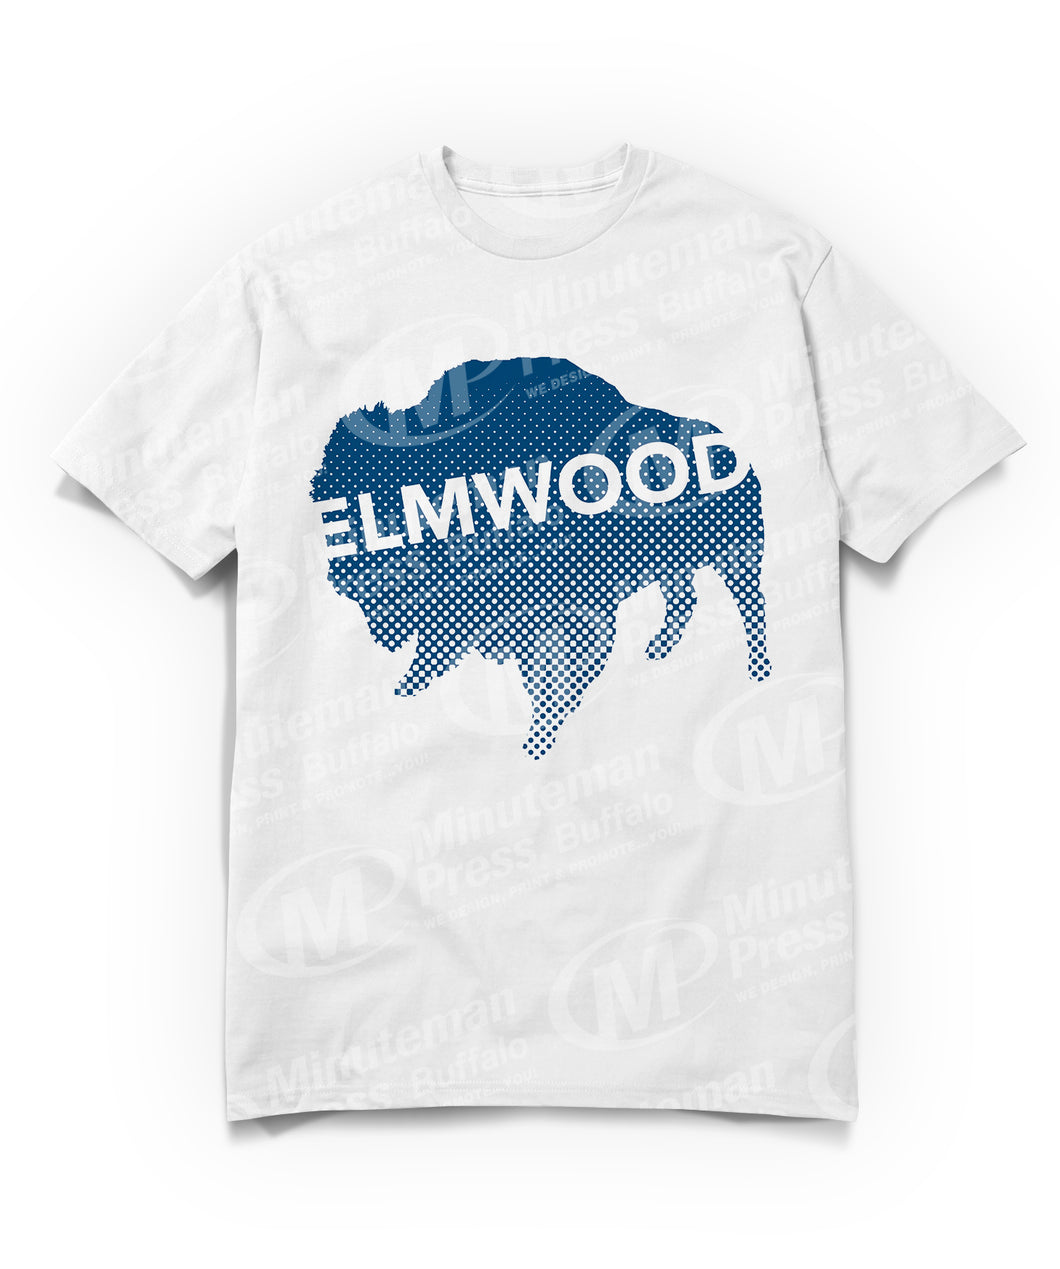 Navy blue Buffalo with white Elmwood text on white t-shirt